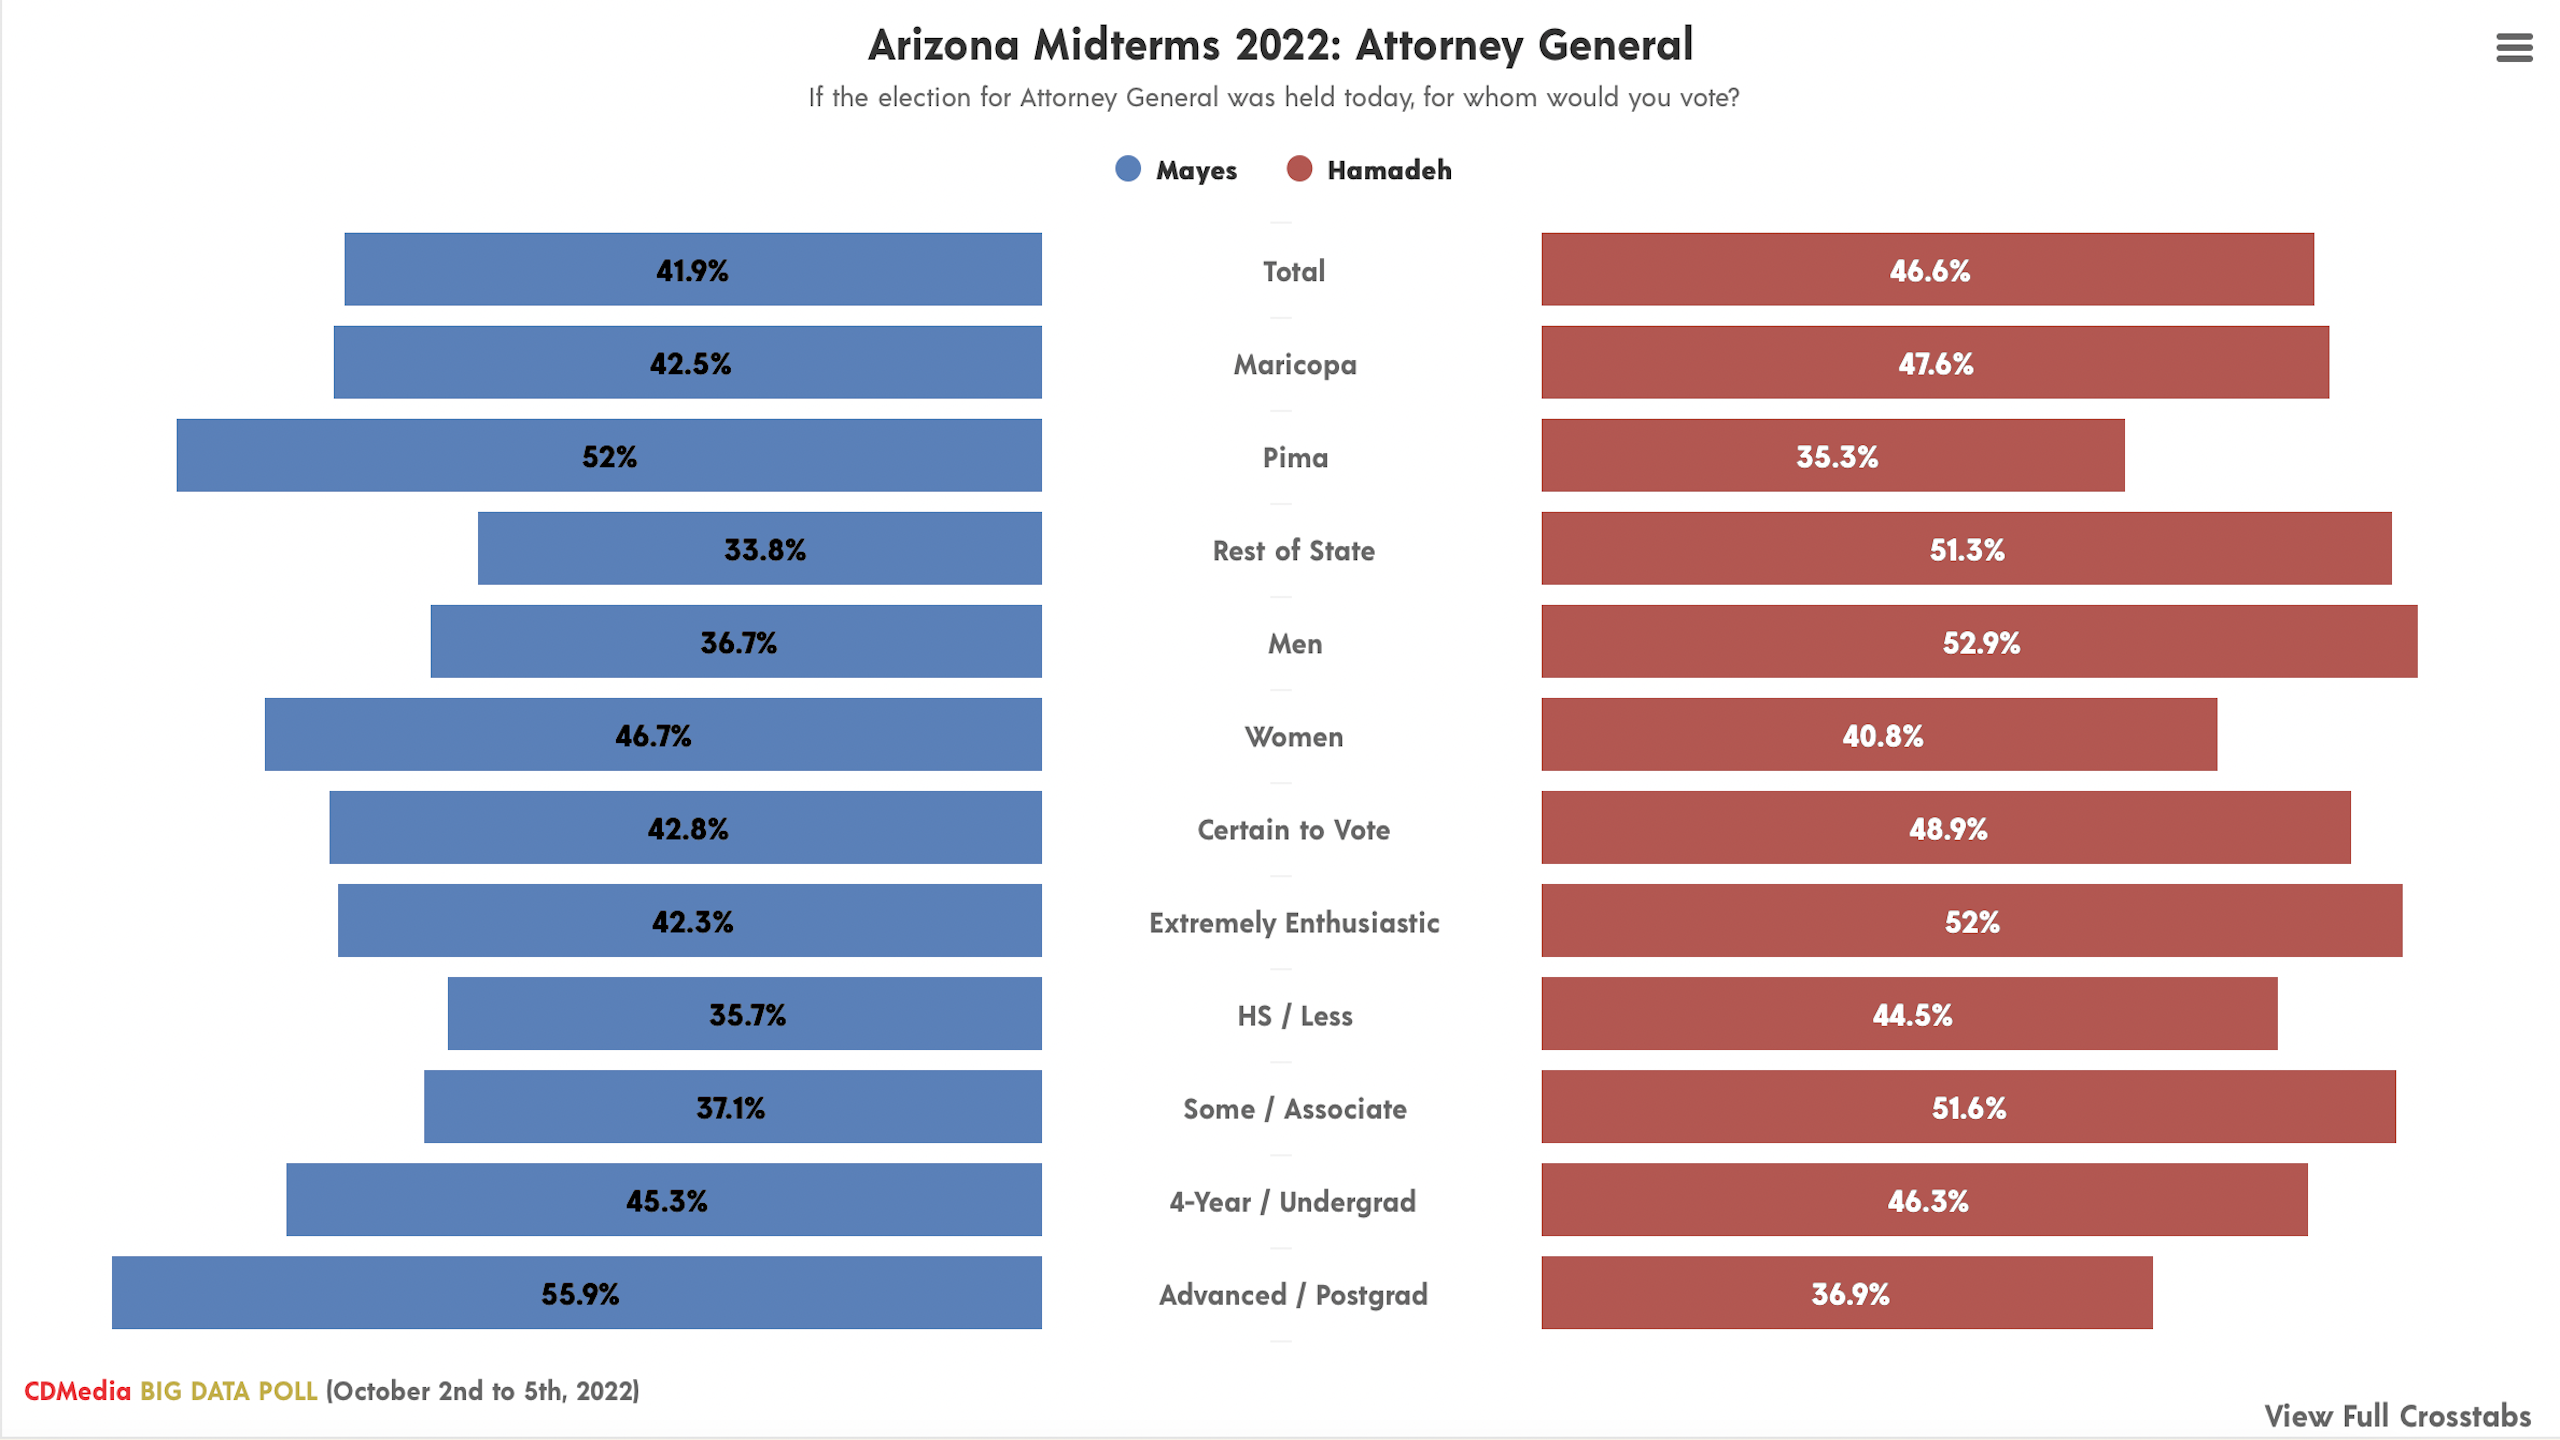 Arizona Attorney General CDMedia Big Data Poll October 2022